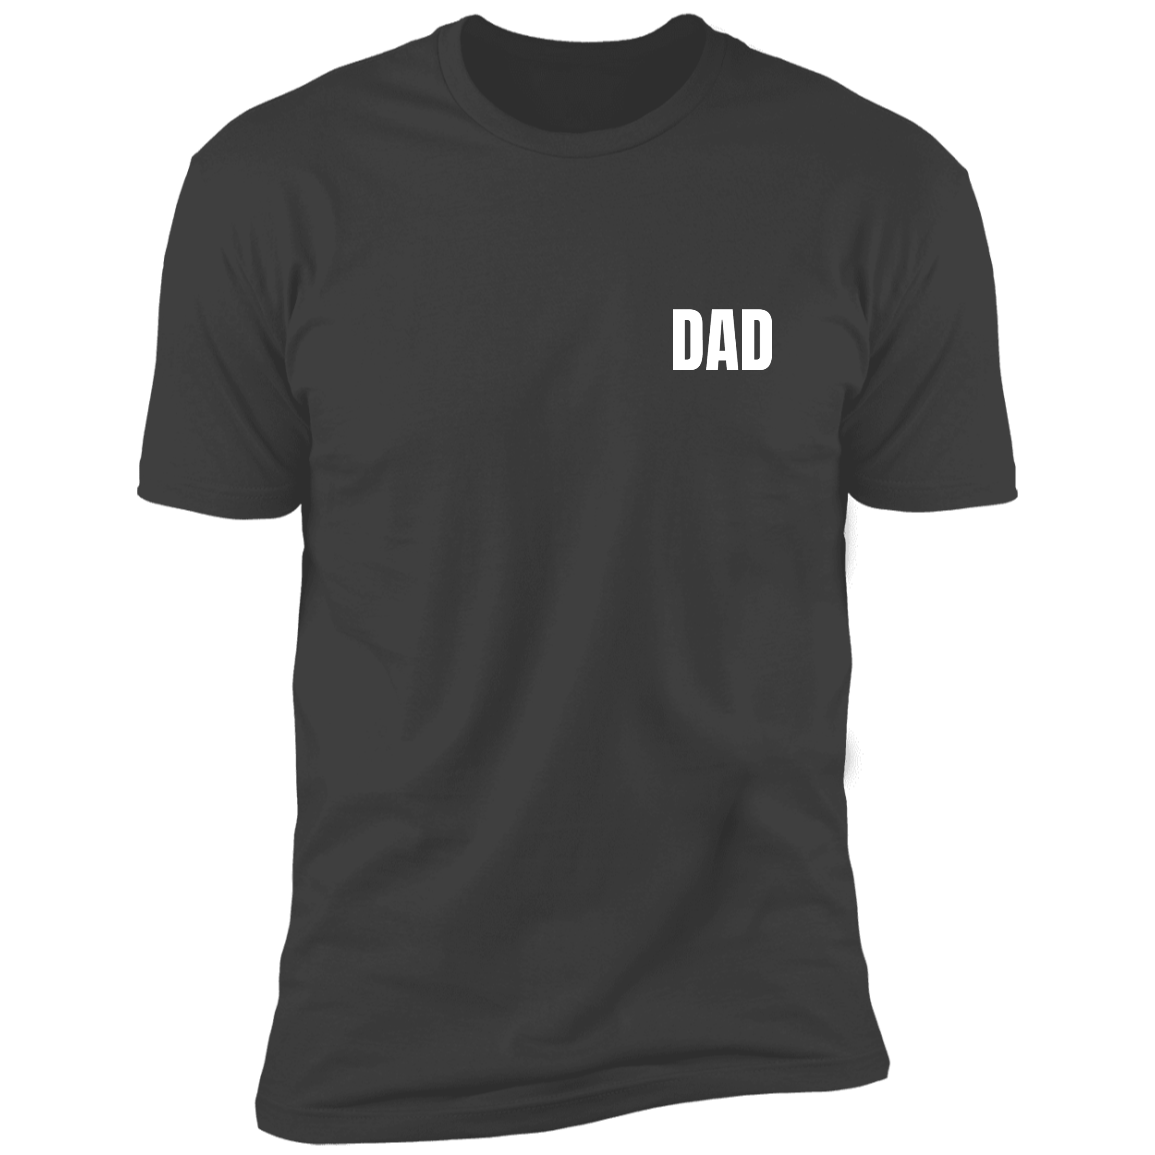 Men's T-Shirt For Dad In Heavy Metal Color